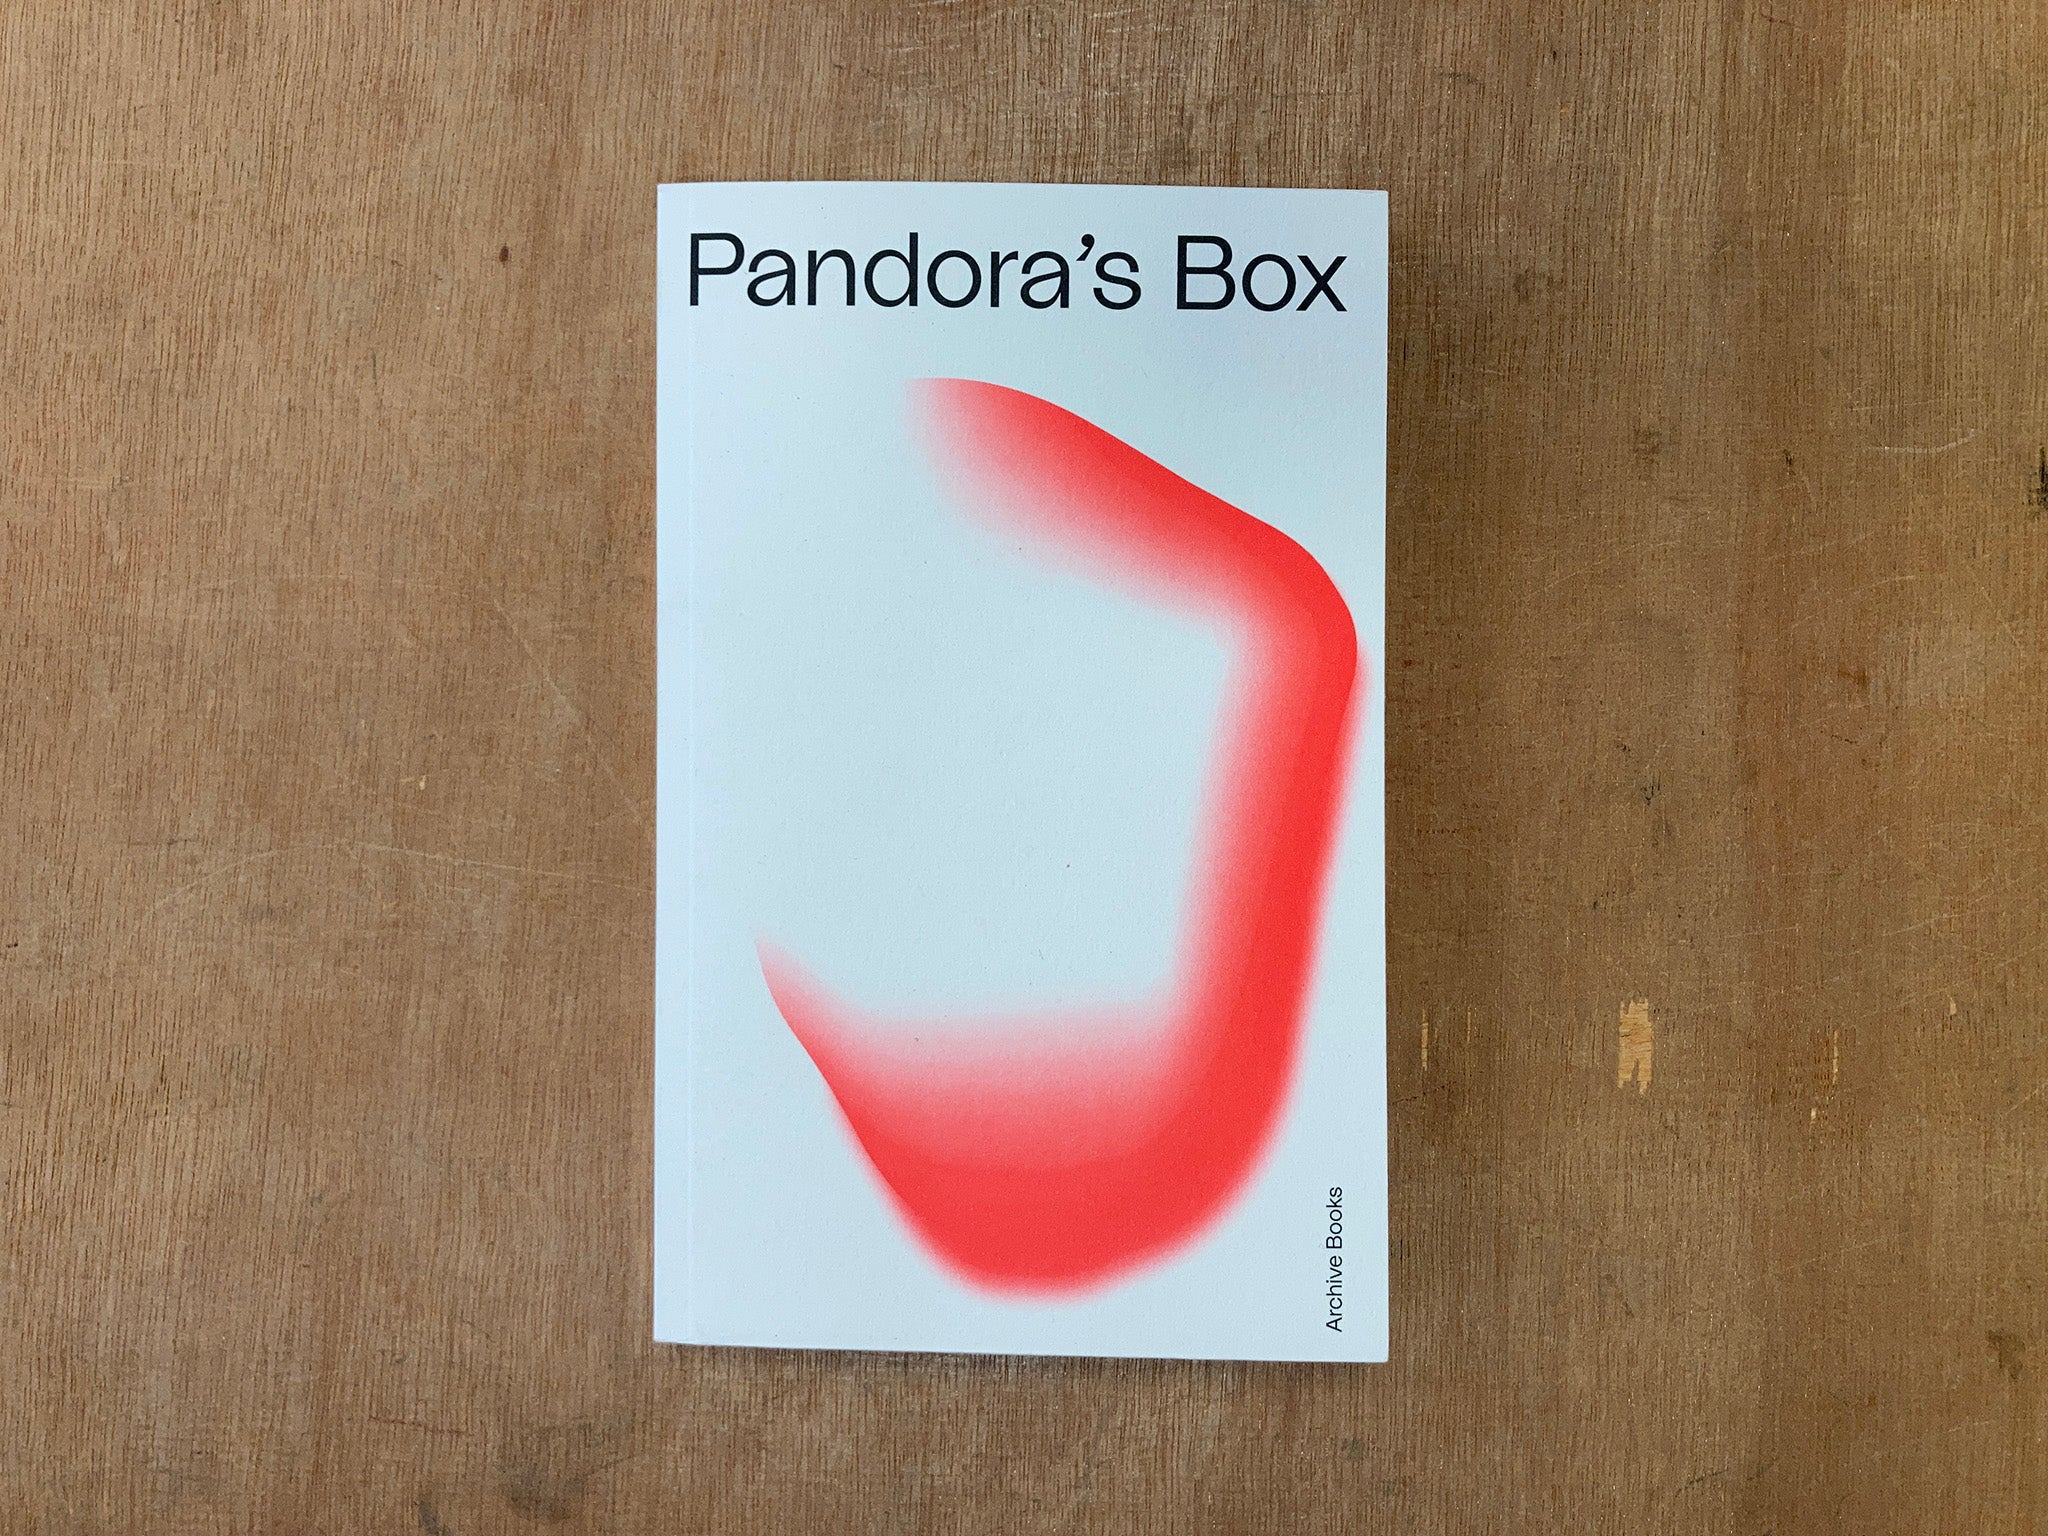 PANDORA'S BOX edited by Susanne M. Winterling and Antonia Lotz